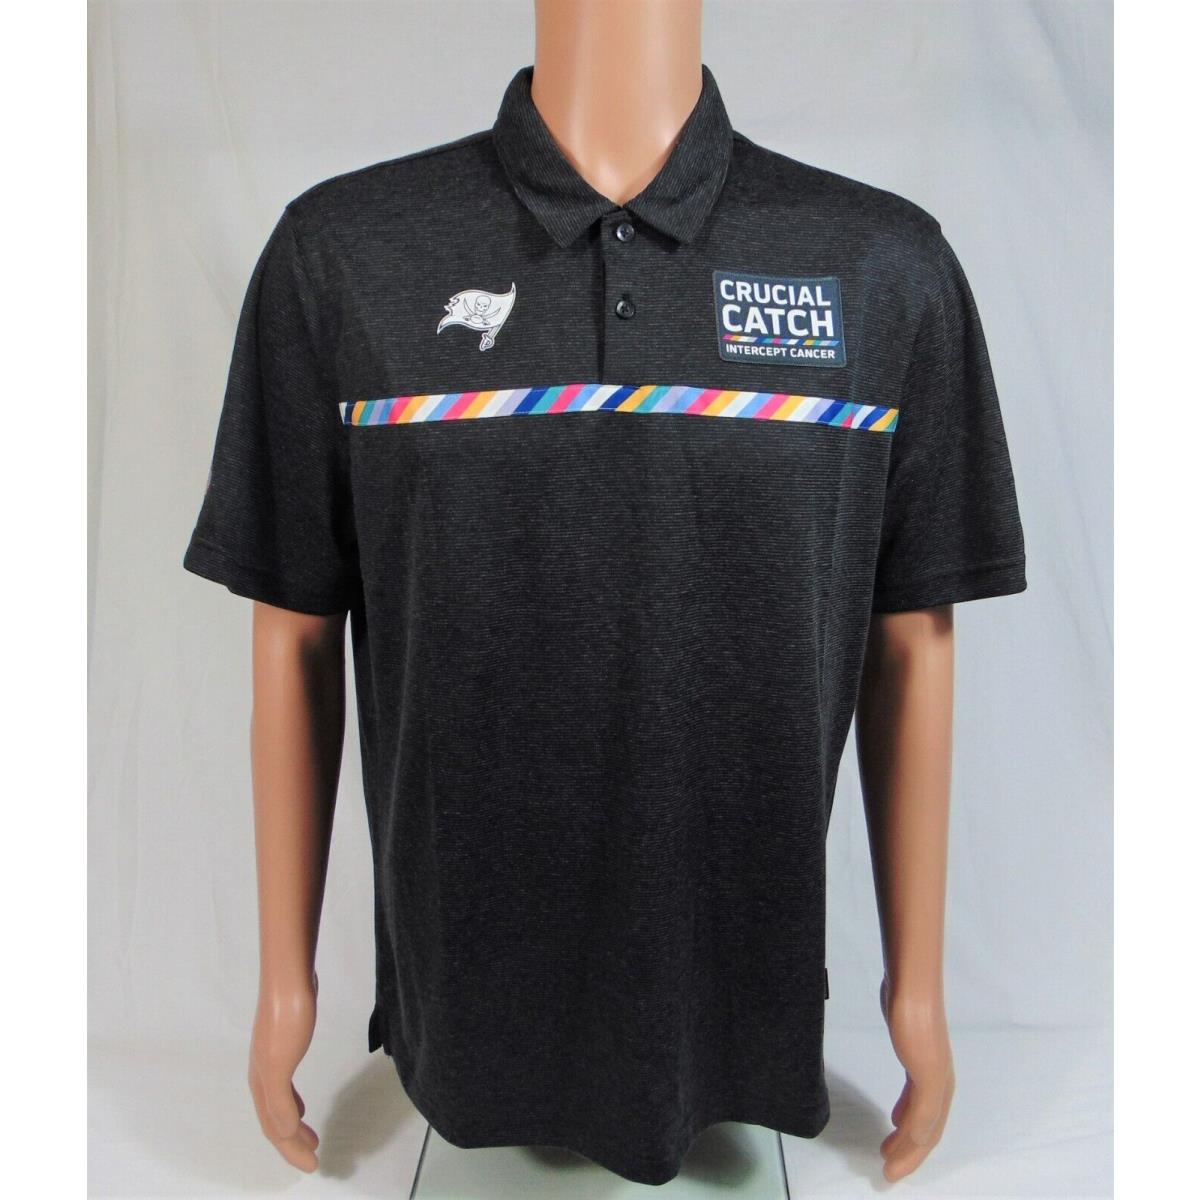 Nike Nfl Crucial Catch Tampa Bay Buccaneers Polo Shirt Sz M NKF9 00A Rare